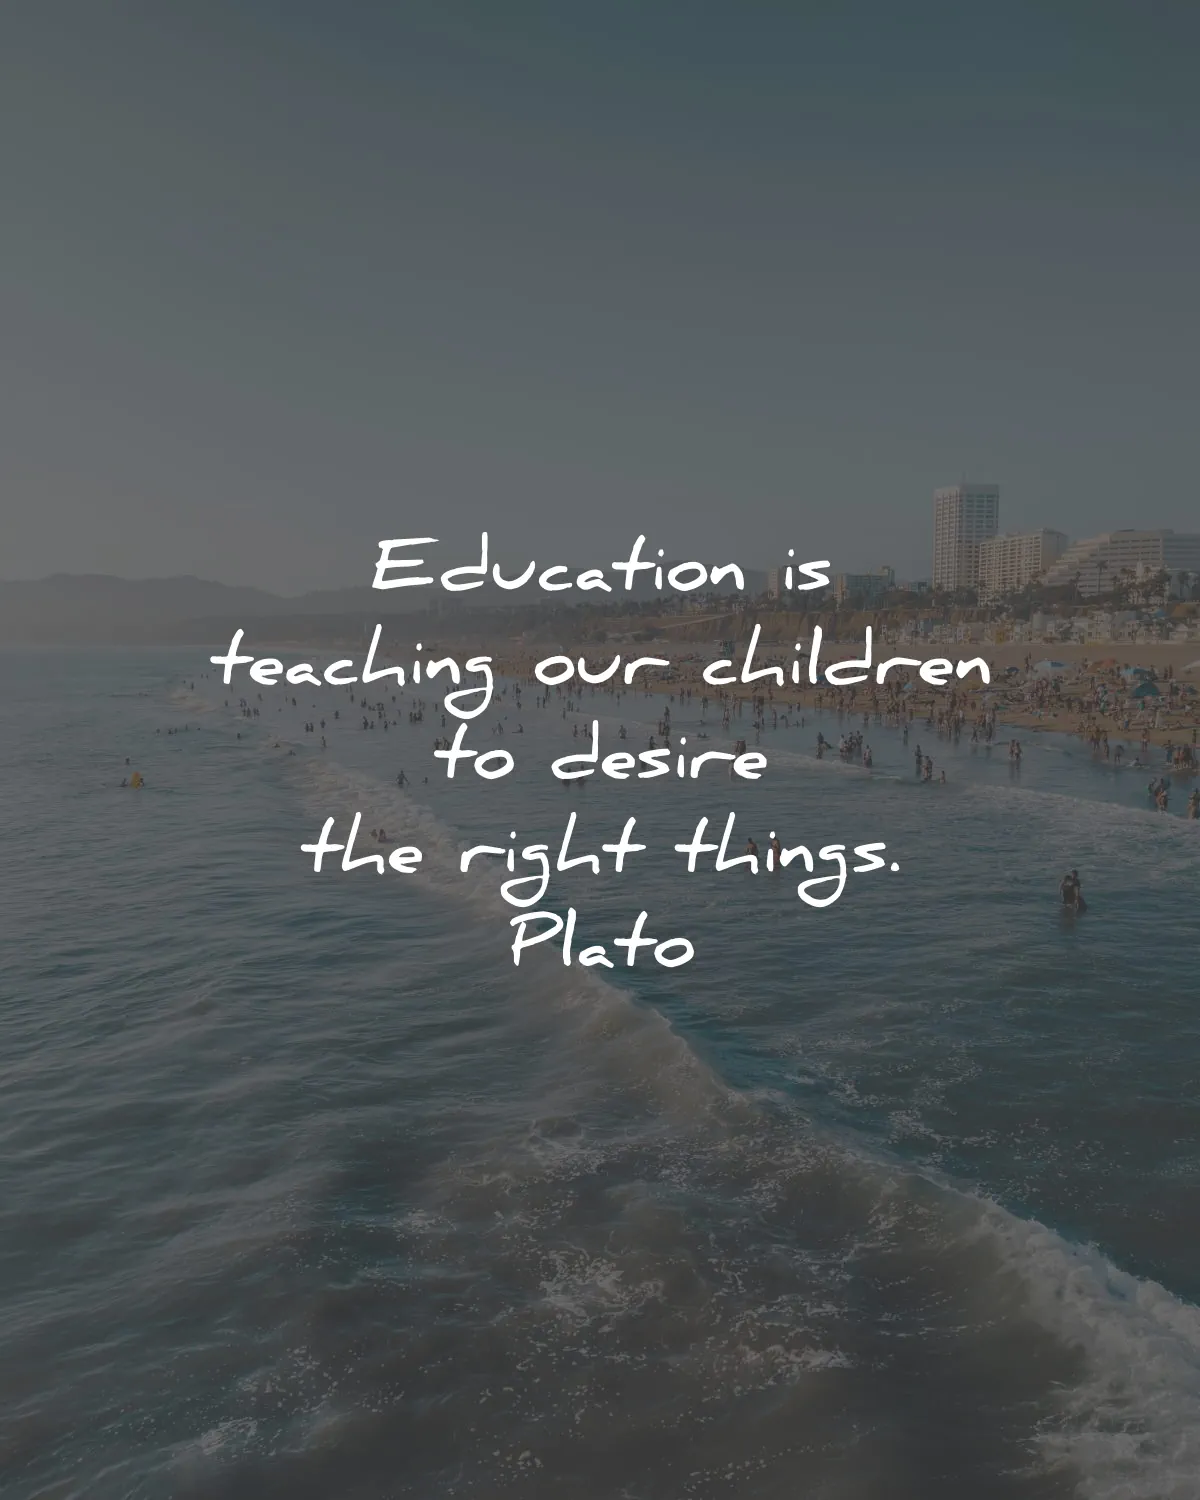 plato quotes education teaching children desire right things wisdom